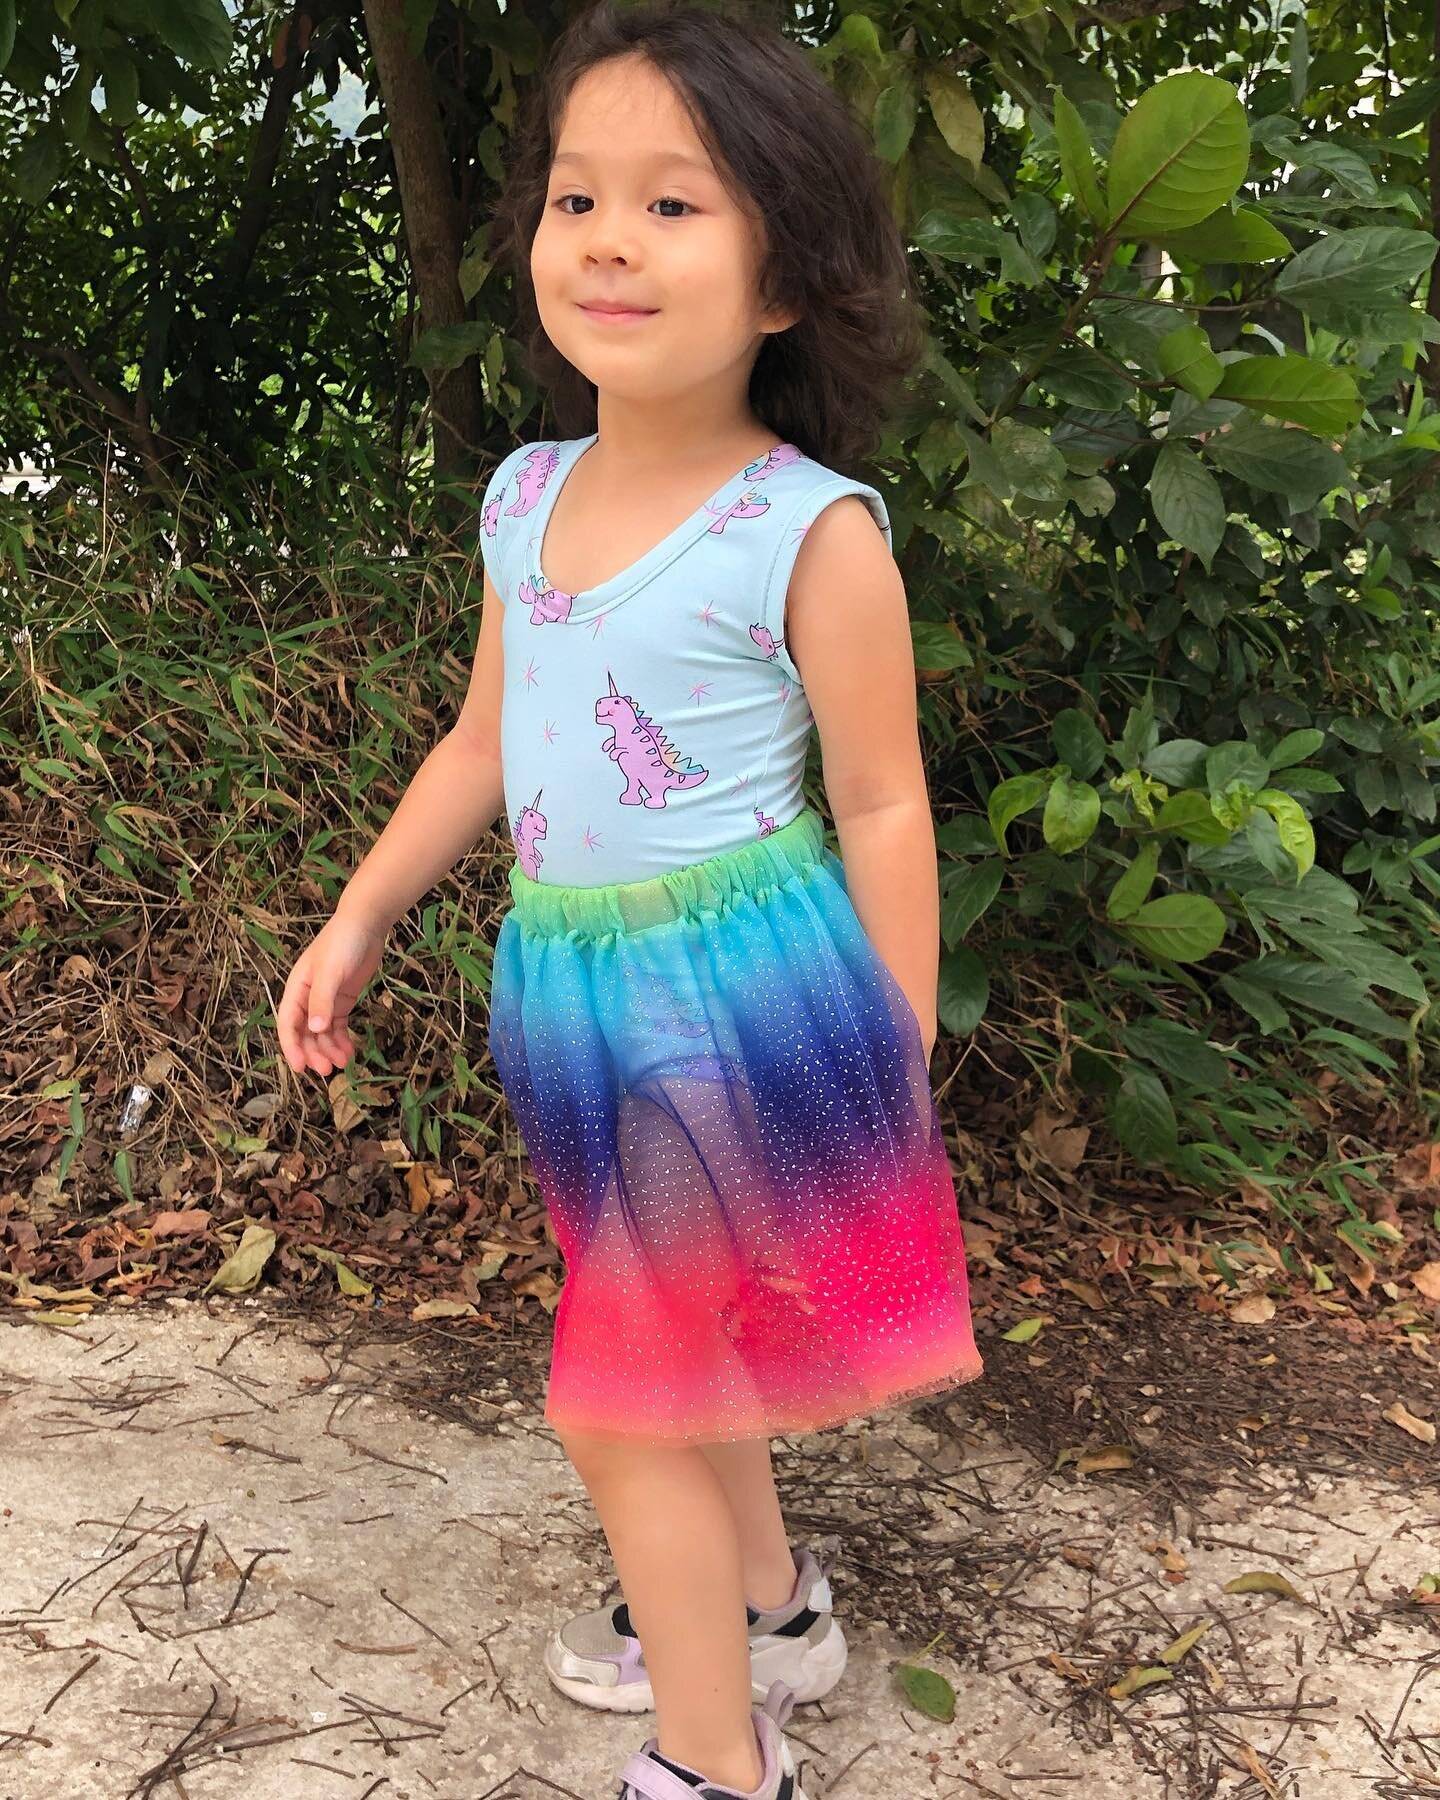 Magical dinocorns + rainbow + sparkles = one very happy little girl. Dinocorn fabric available for preorder from @wild_boar_fabrics 
.
.
.
.
.
.
.
.
.
.
.
#insomniactextiles #wildboarfabrics #handcraftedinhongkong #locallysourced #locallymade #suppor